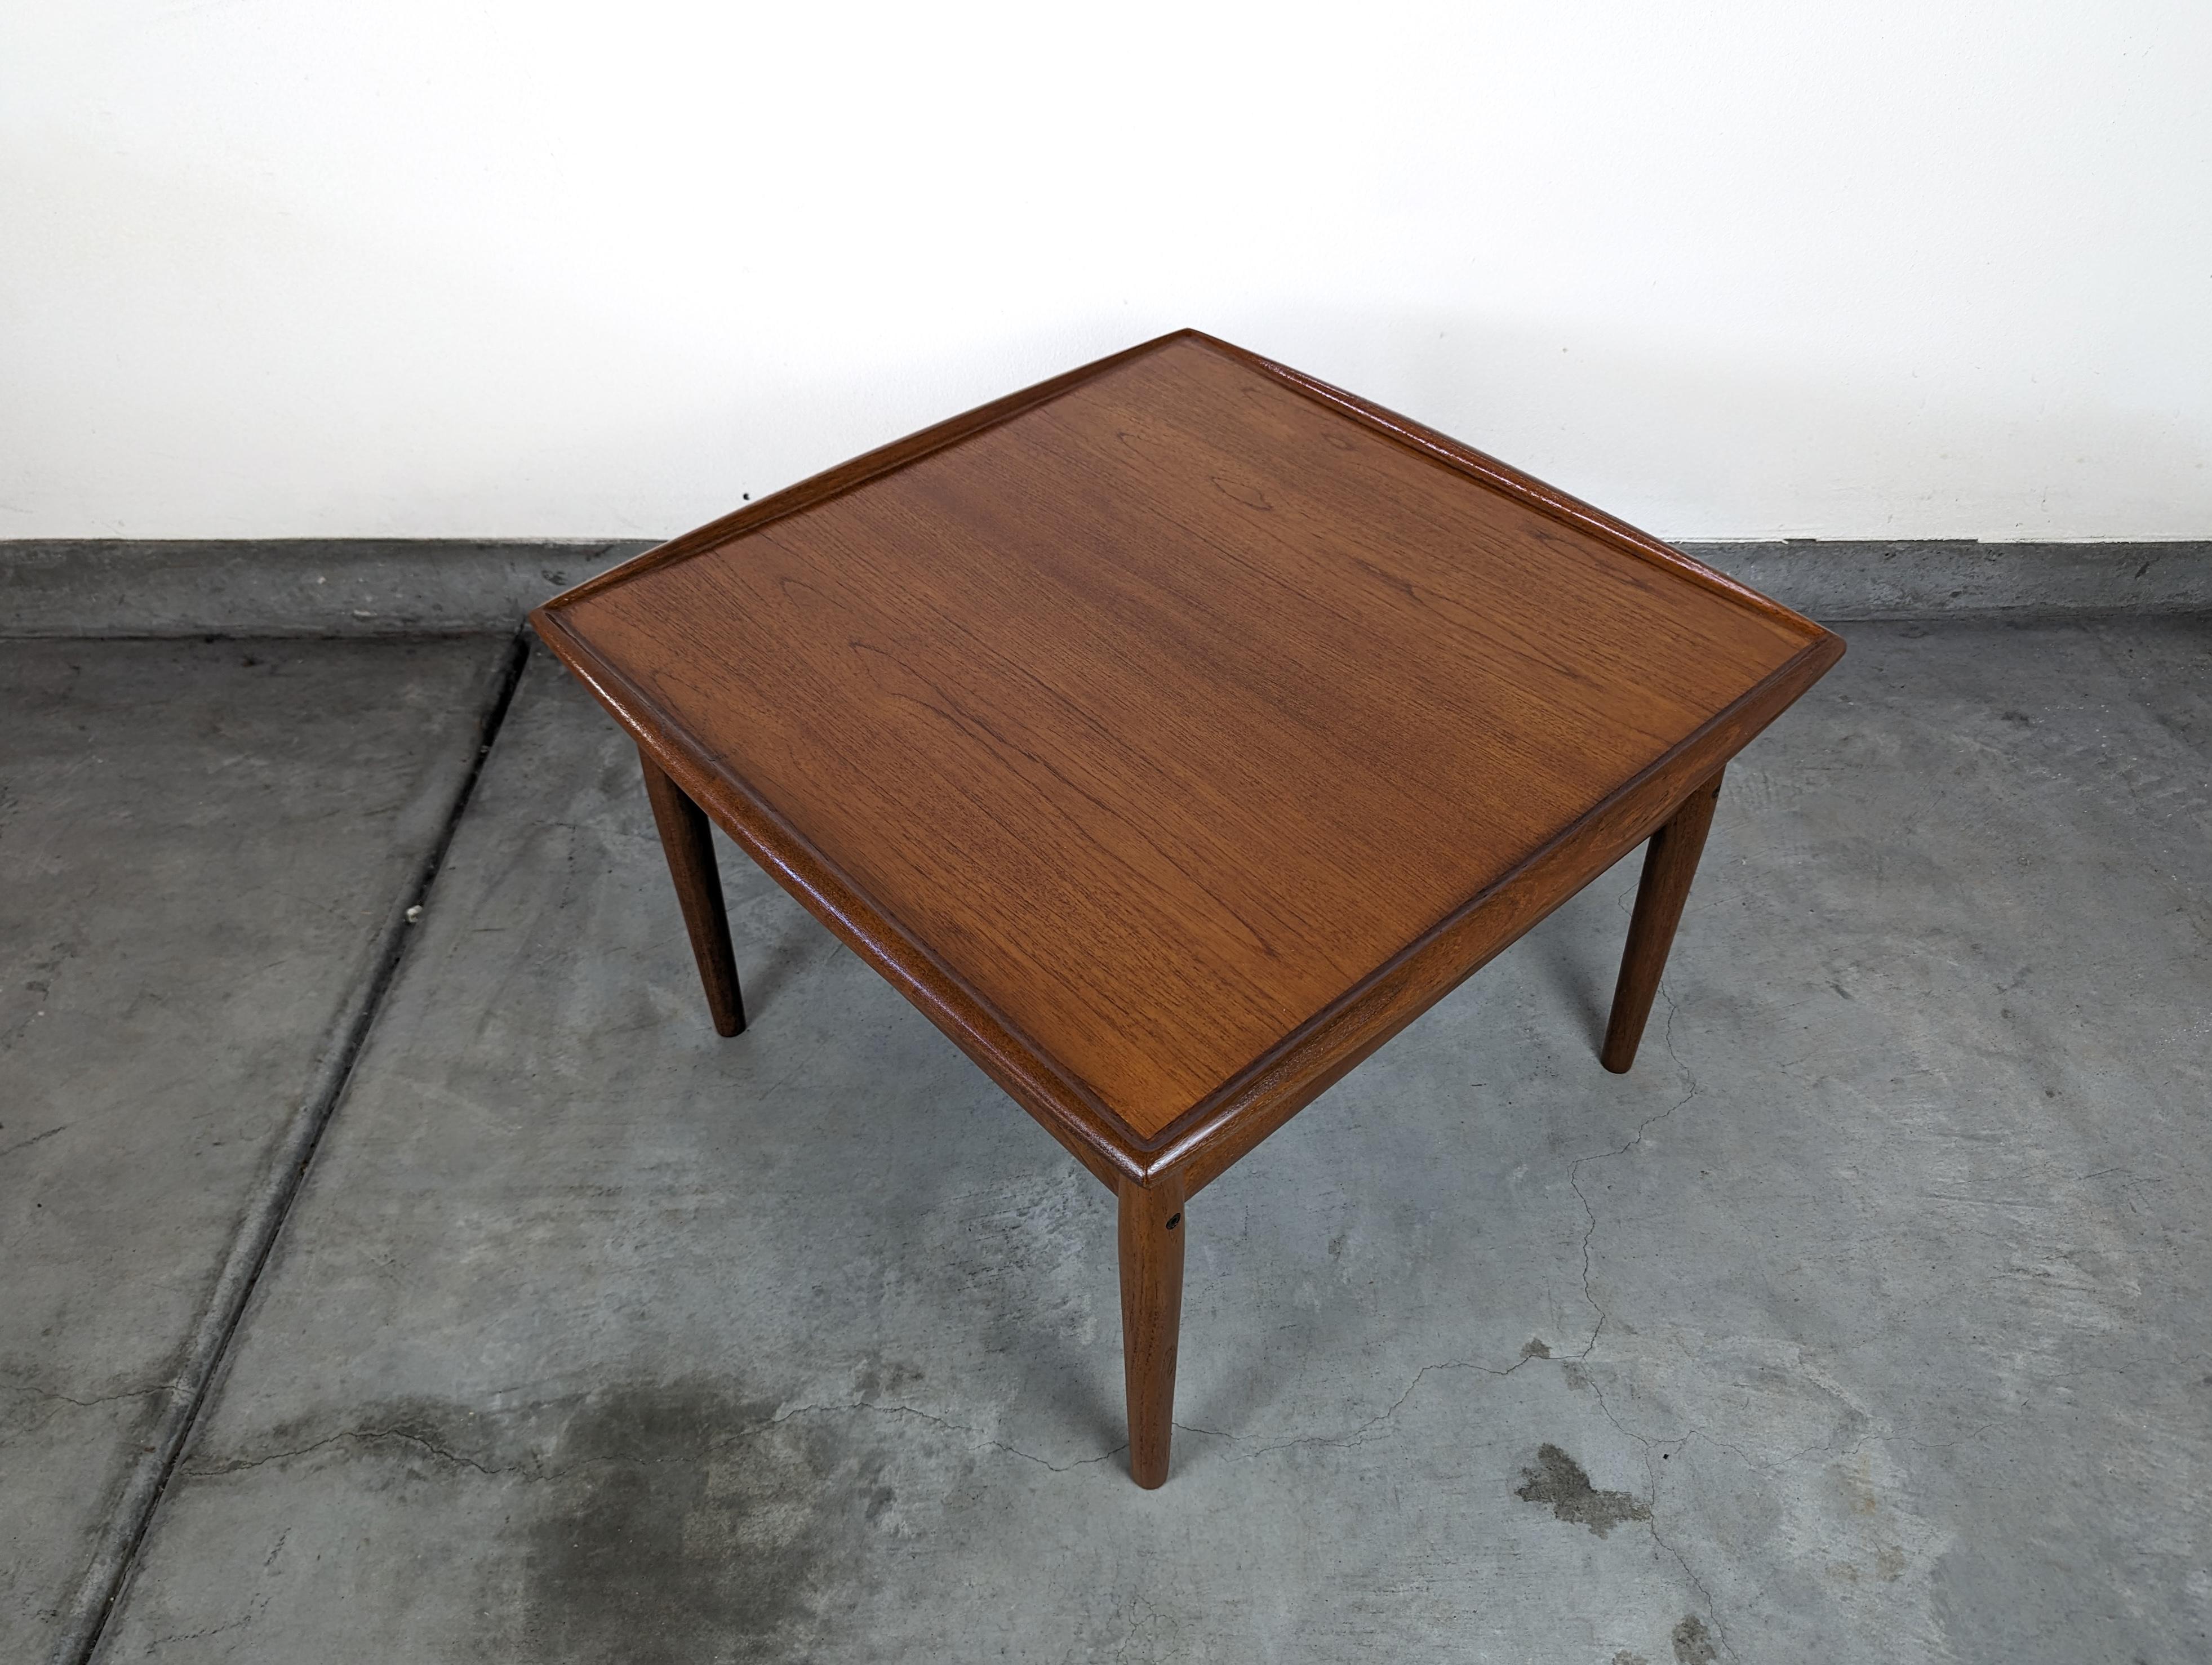 Danish Mid Century Modern Teak Side Table Designed by Grete Jalk for Glostrup, c1960s For Sale